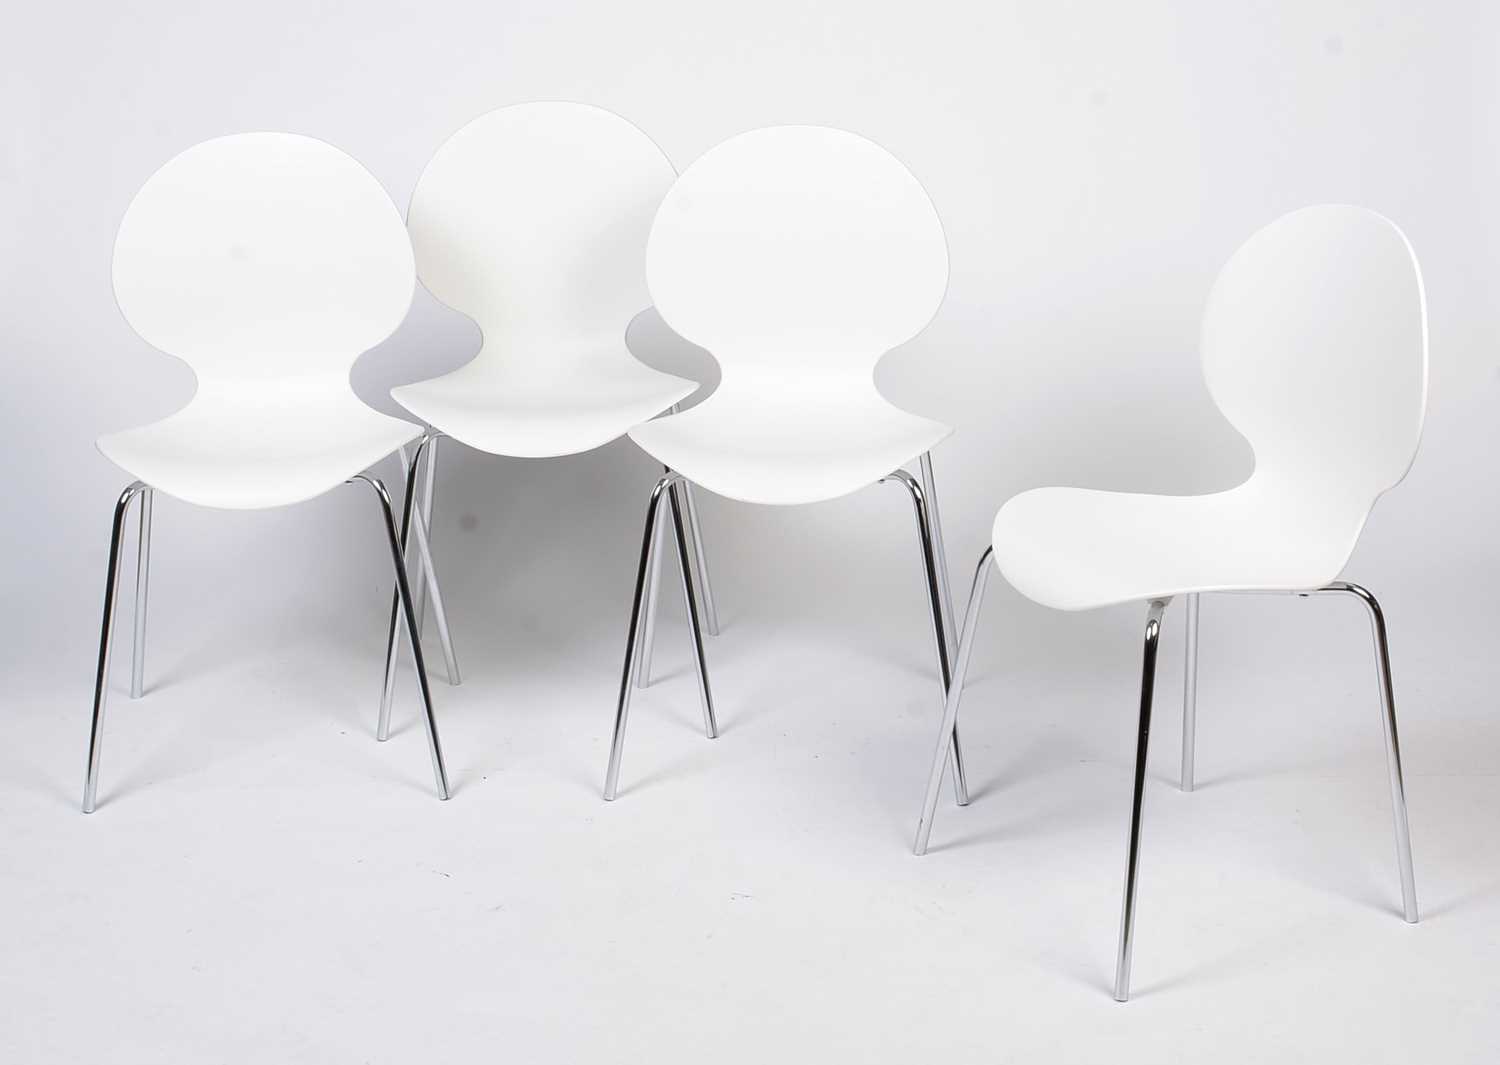 Lot 405 - Galvano Tecnica: four Italian white plastic shell chairs.